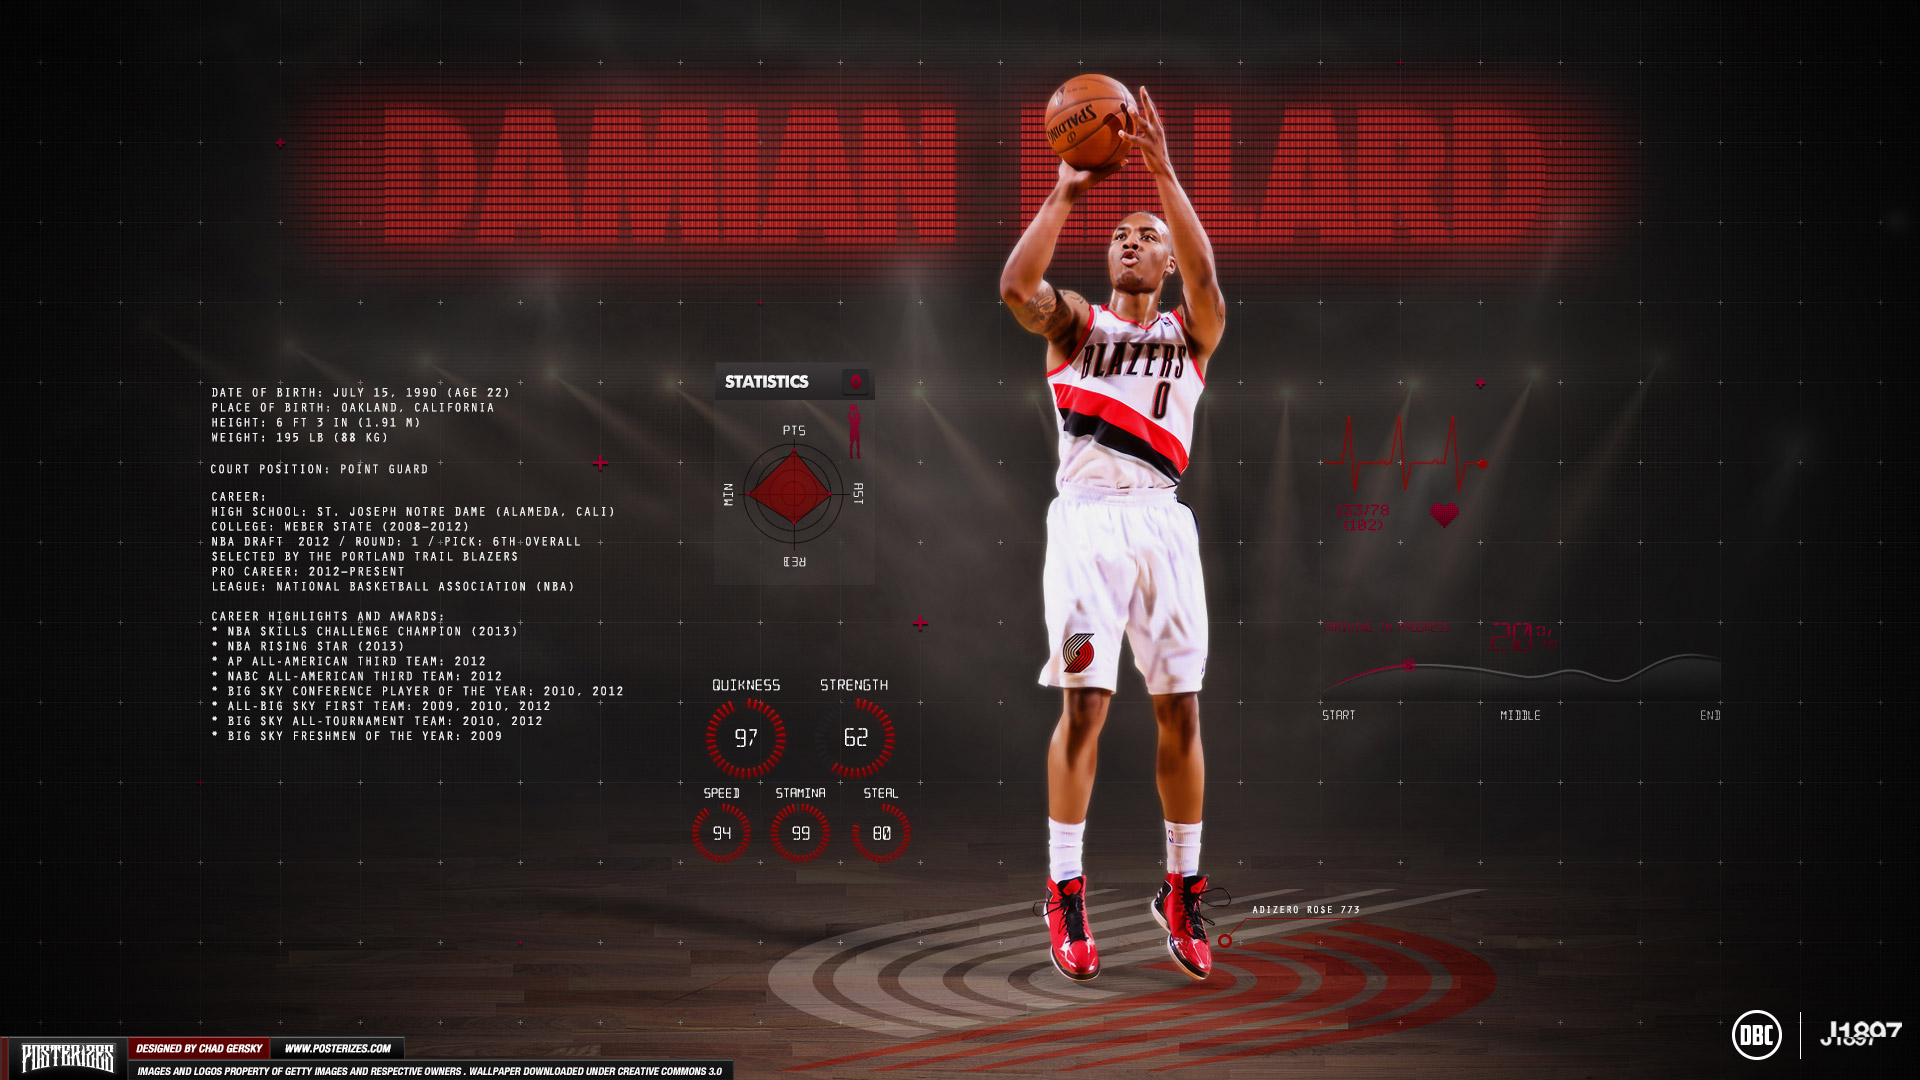 Damian Lillard Wallpapers | Basketball Wallpapers at ...
 Damian Lillard 2013 Wallpaper